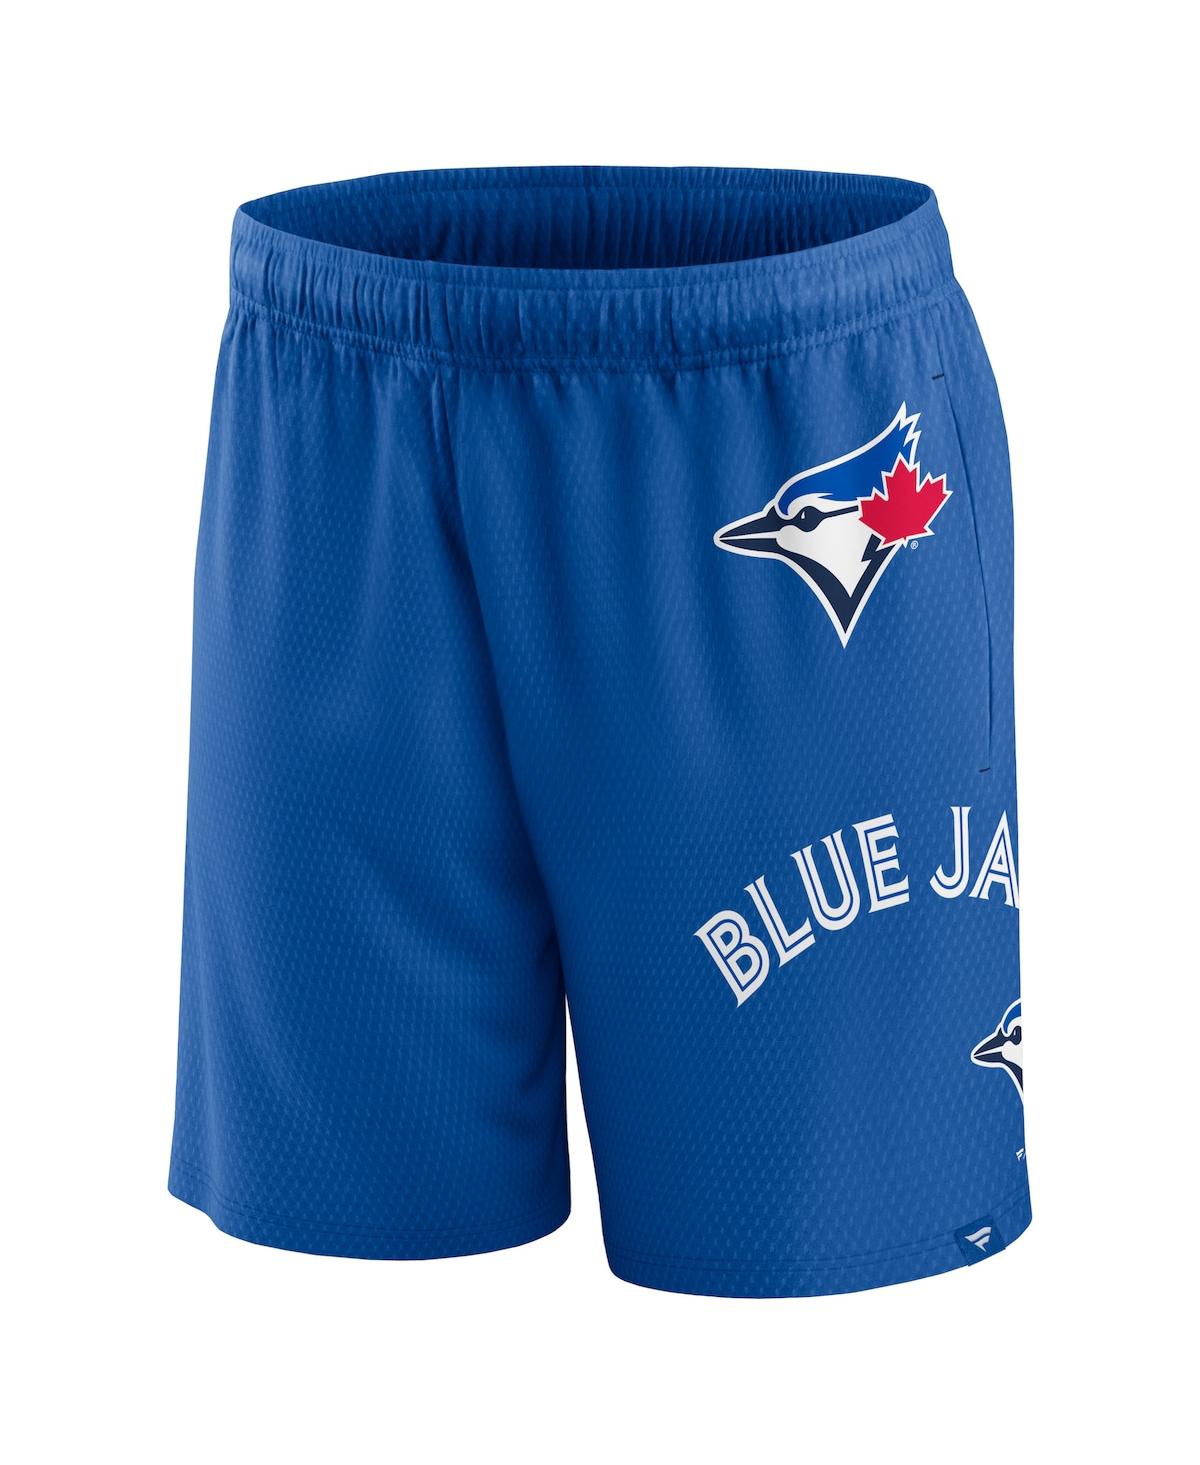 Shop Fanatics Men's  Royal Toronto Blue Jays Clincher Mesh Shorts